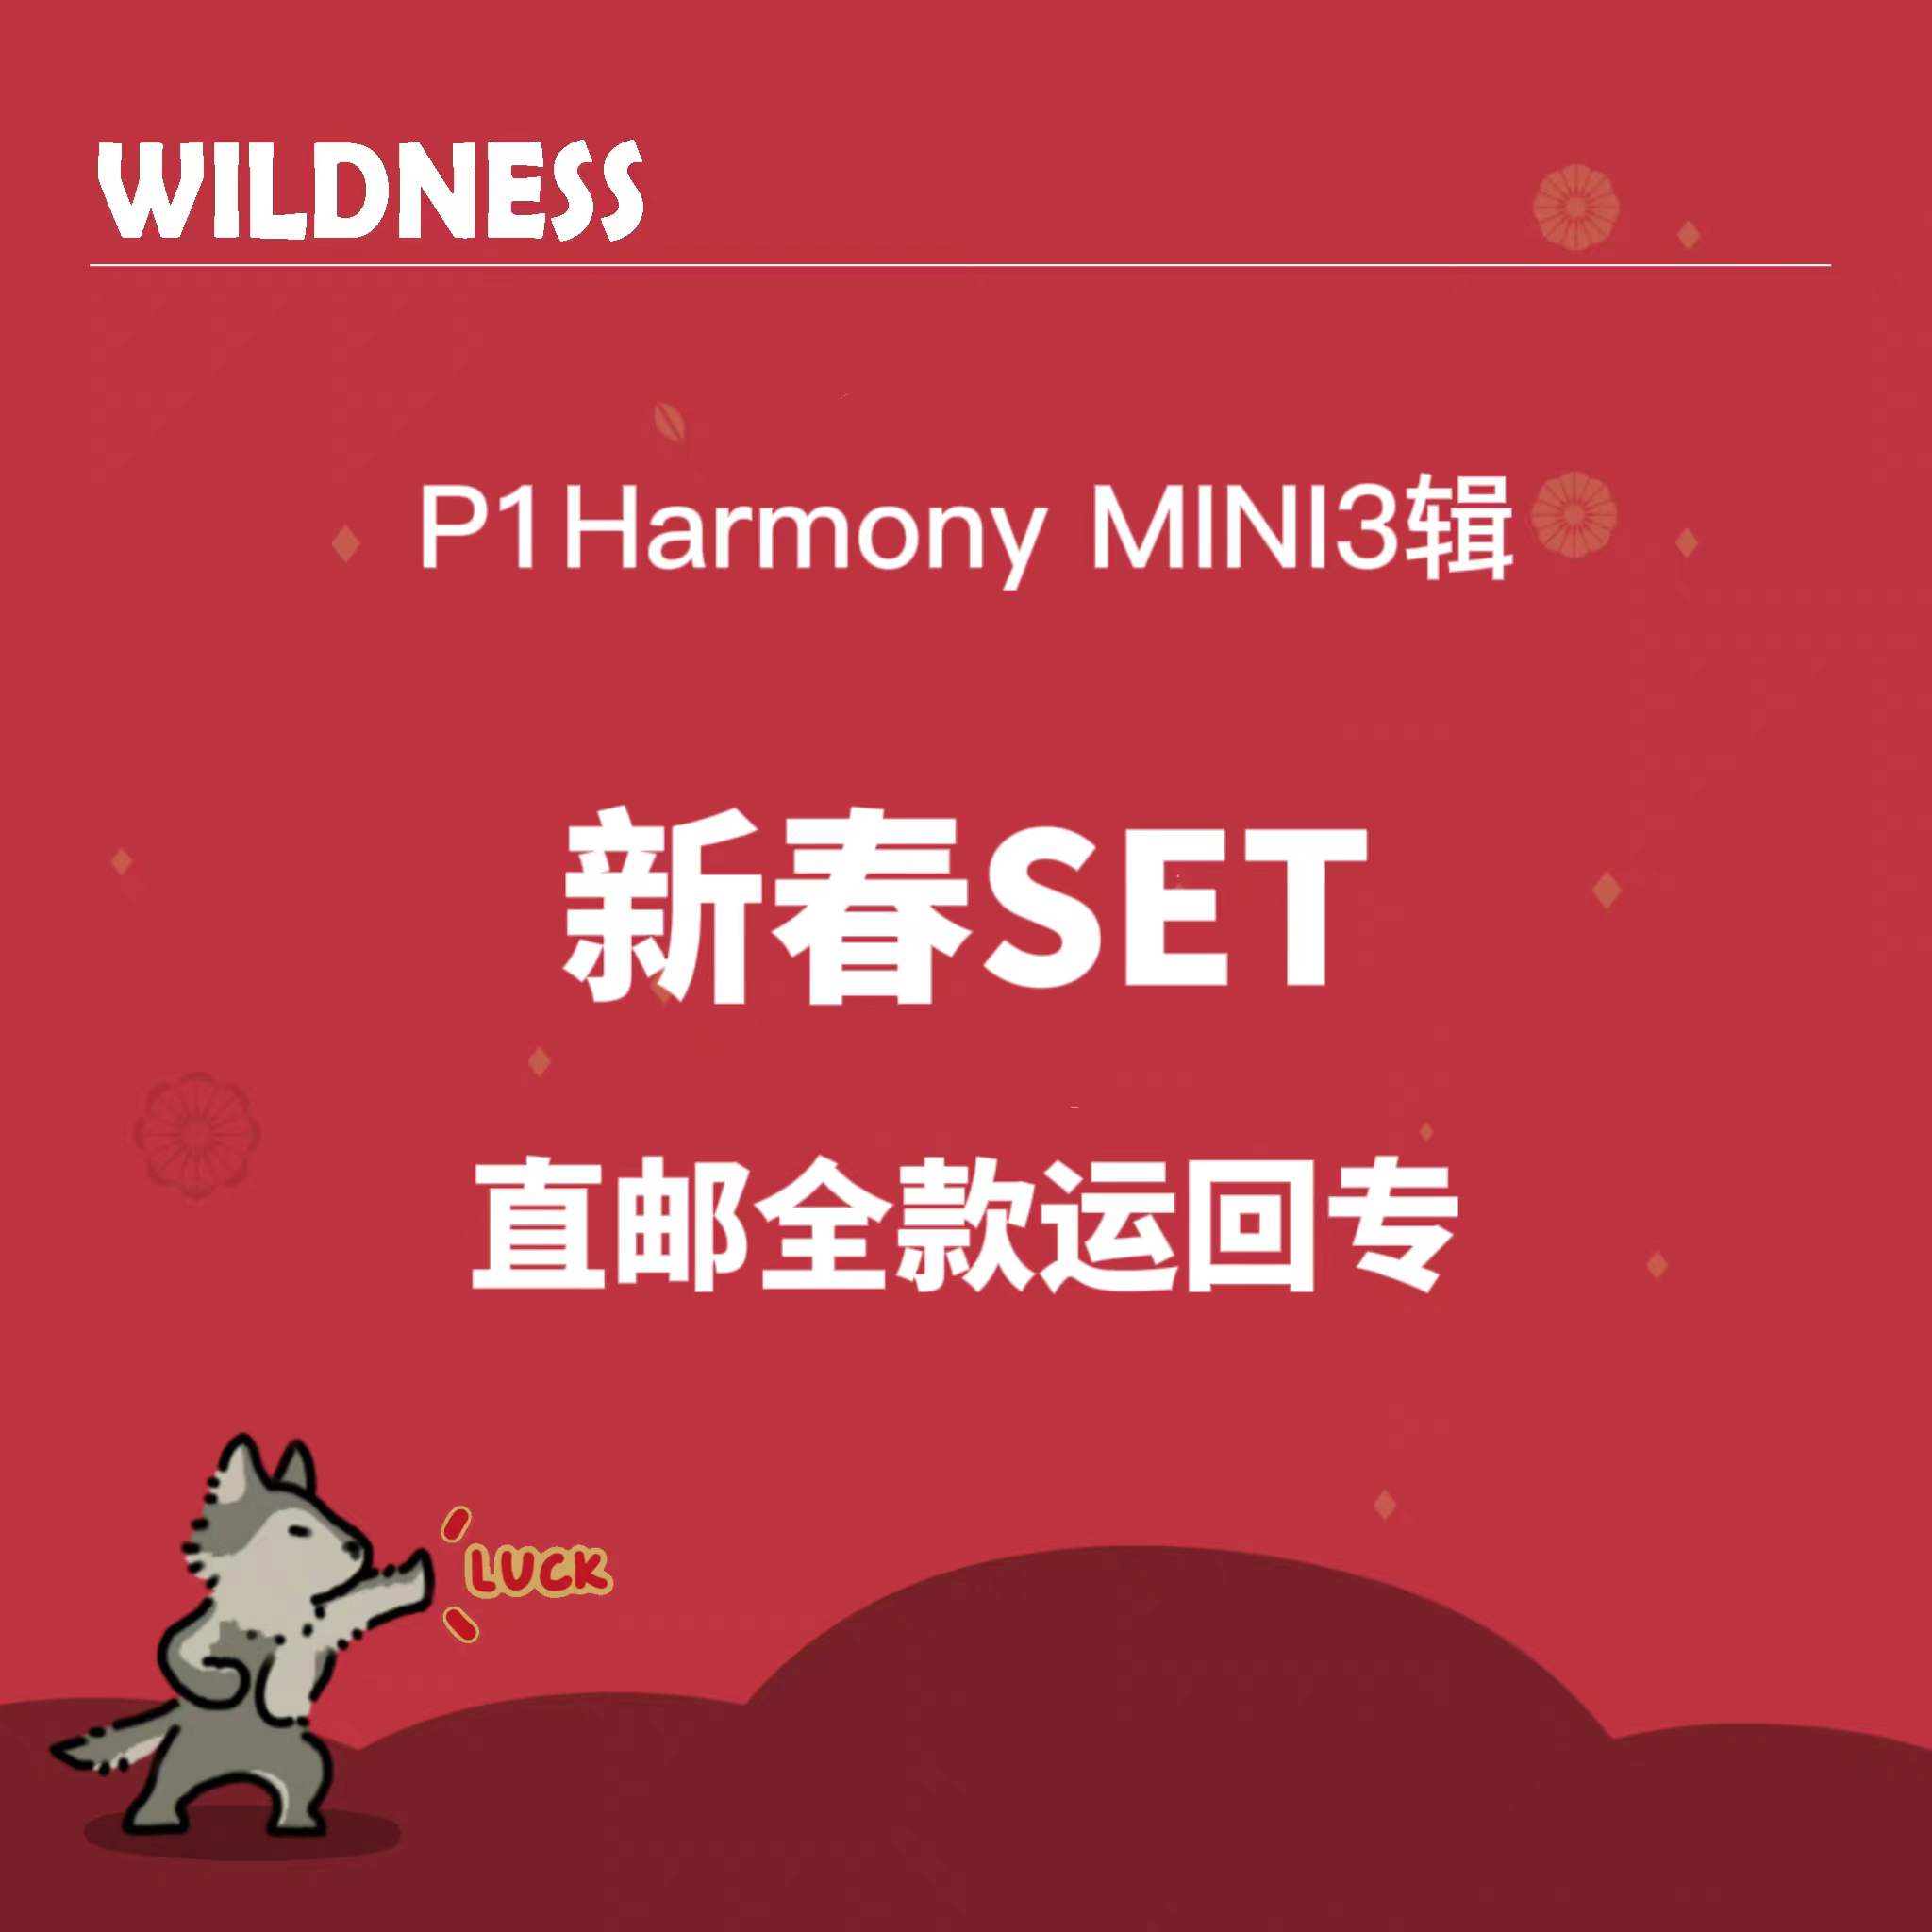 [全款 新春SET] P1Harmony - 3rd 迷你专辑 [DISHARMONY : FIND OUT]_Wildness_尹起昊个站